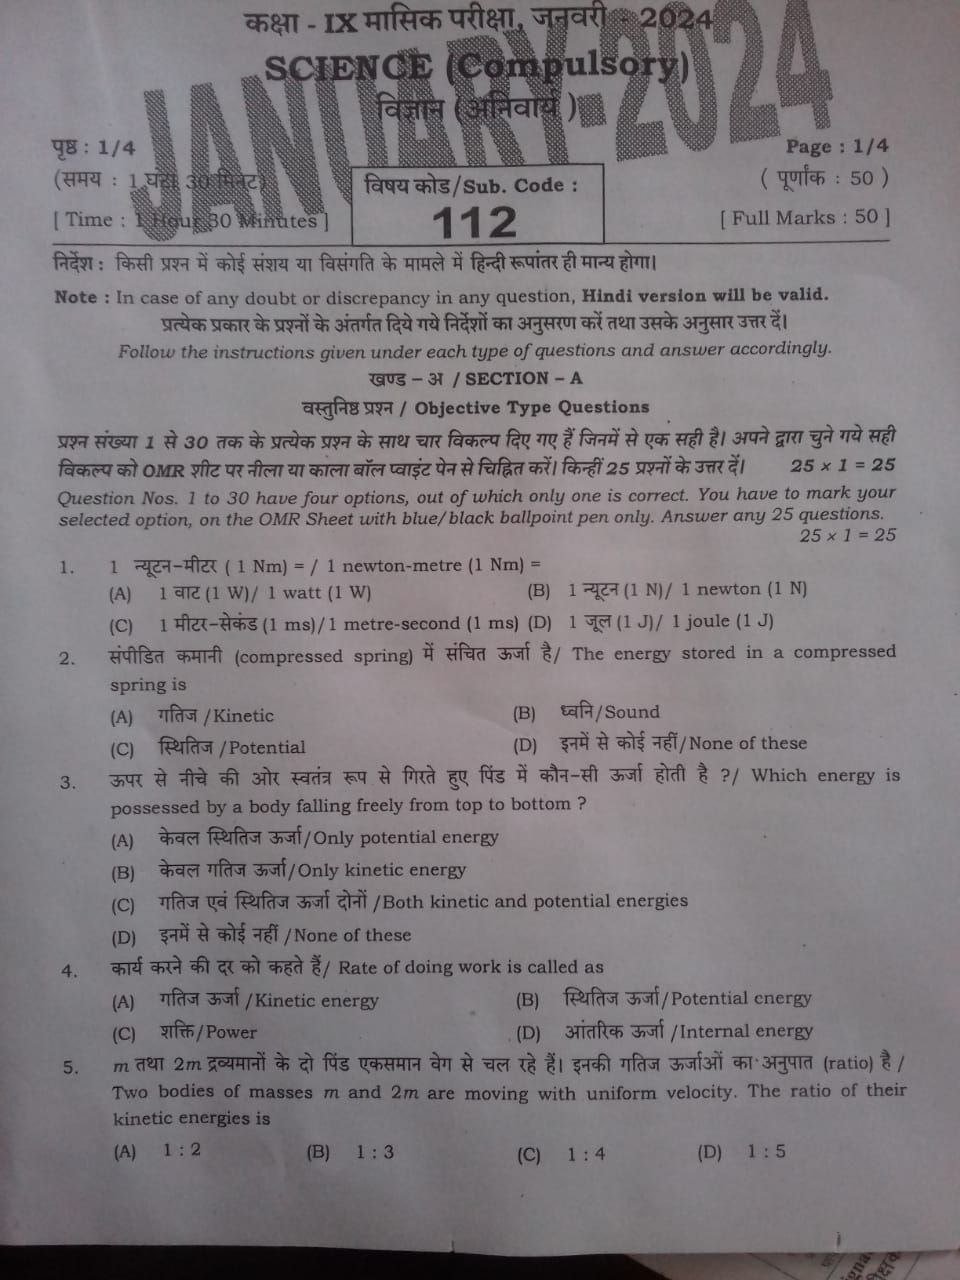 Bihar Board 9th Science Answer key 2024